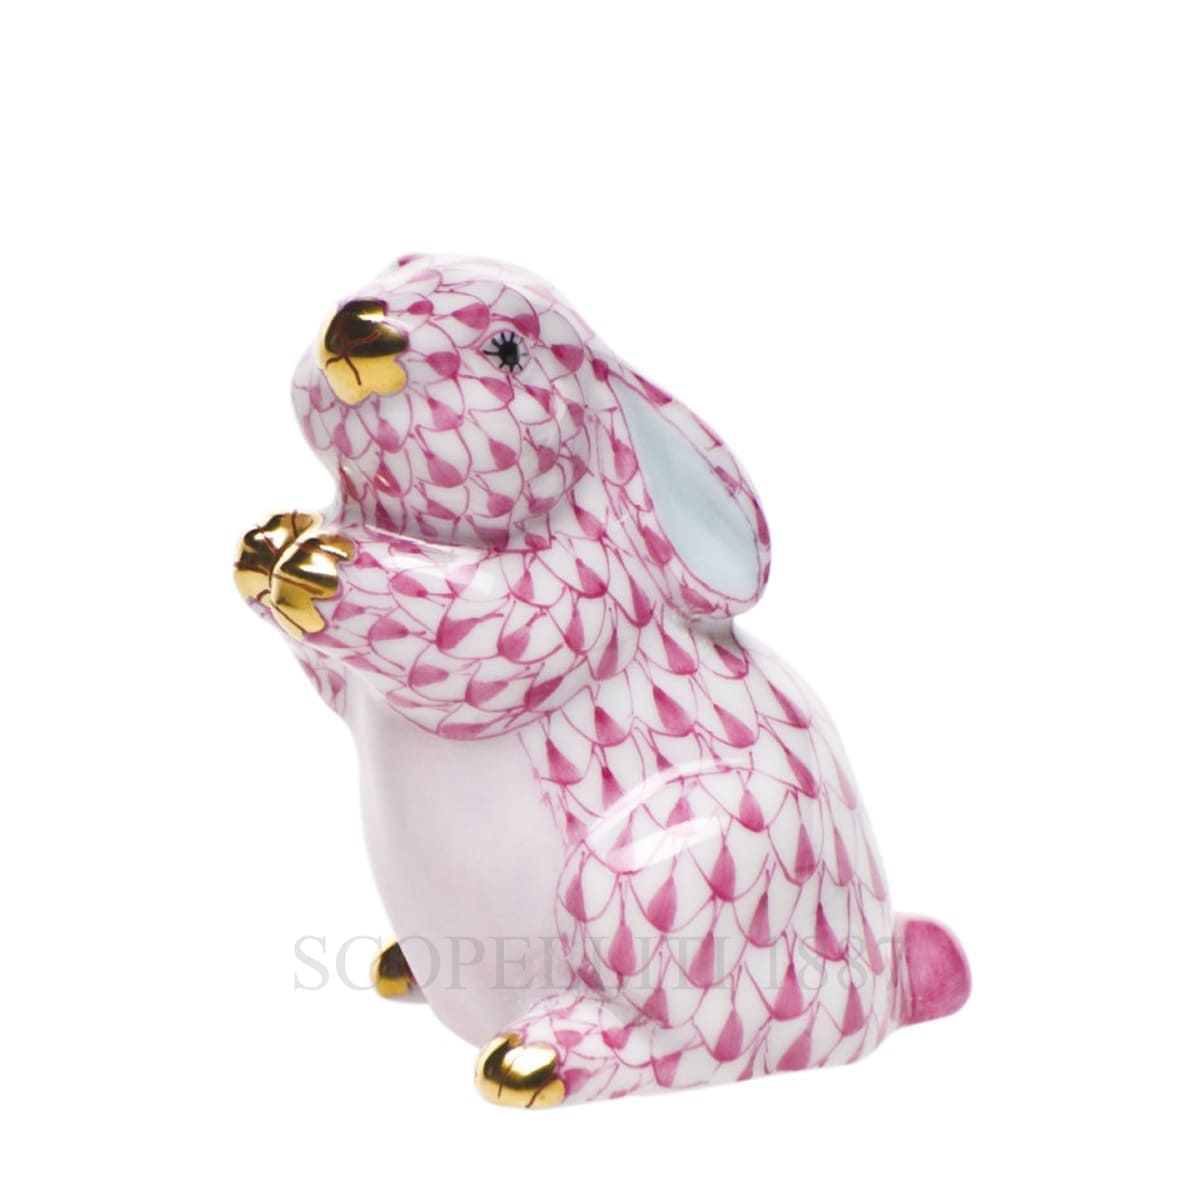 herend porcelain bunny figurine pink